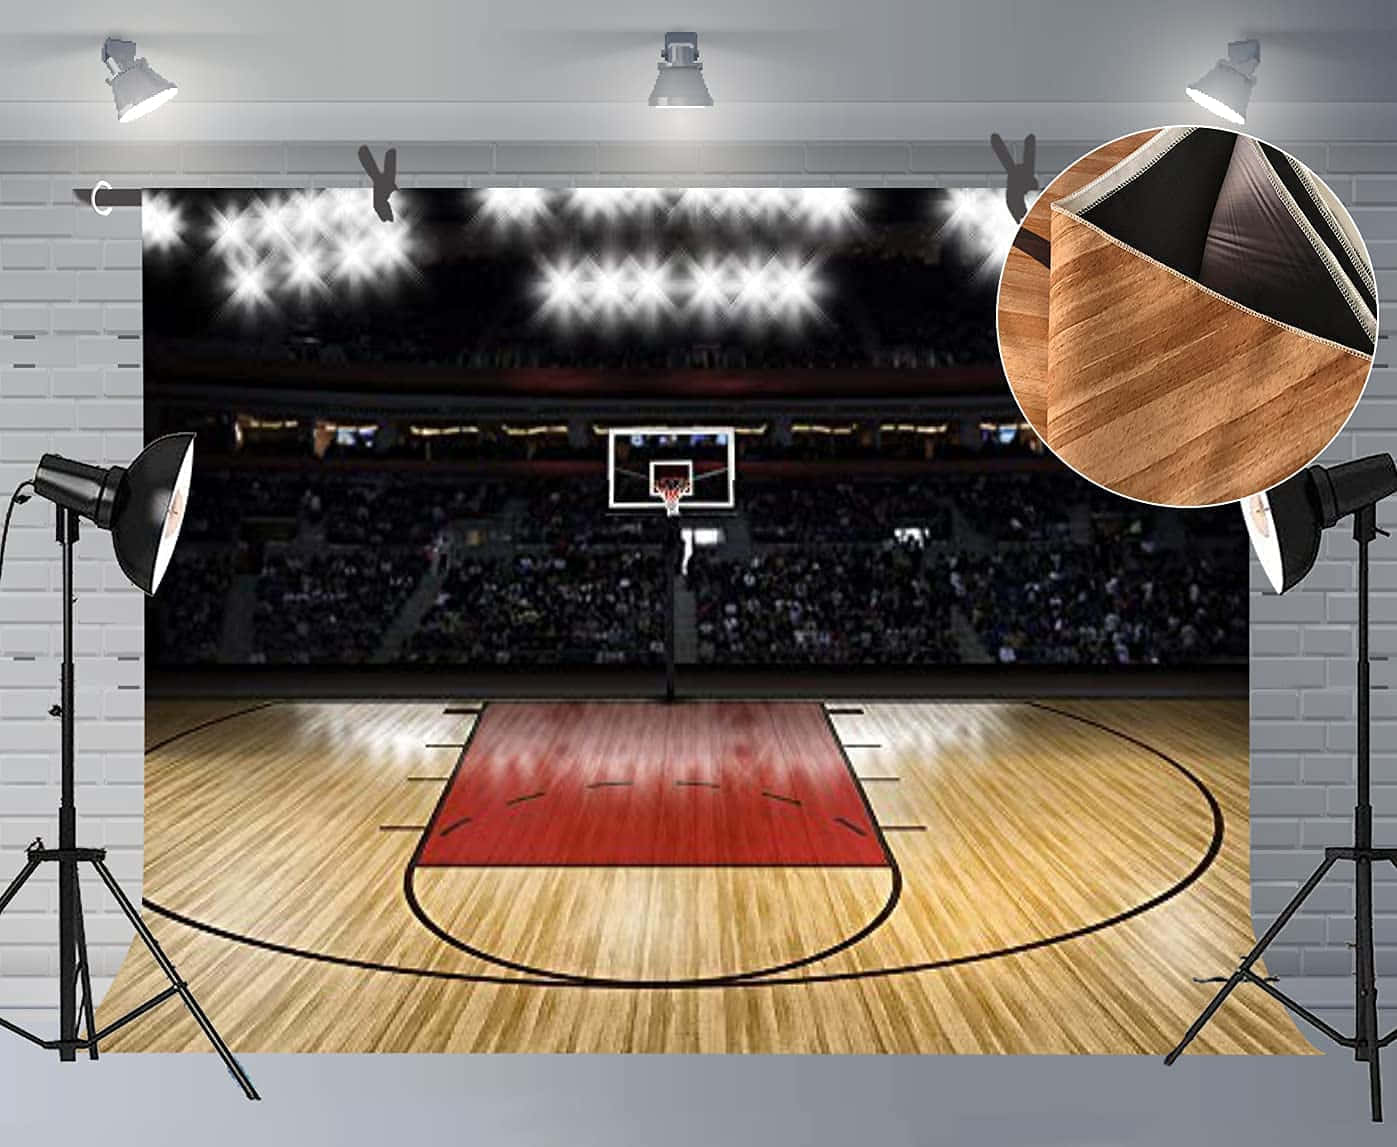 Perfektvälvårdat Basketplan I En Idrottshall